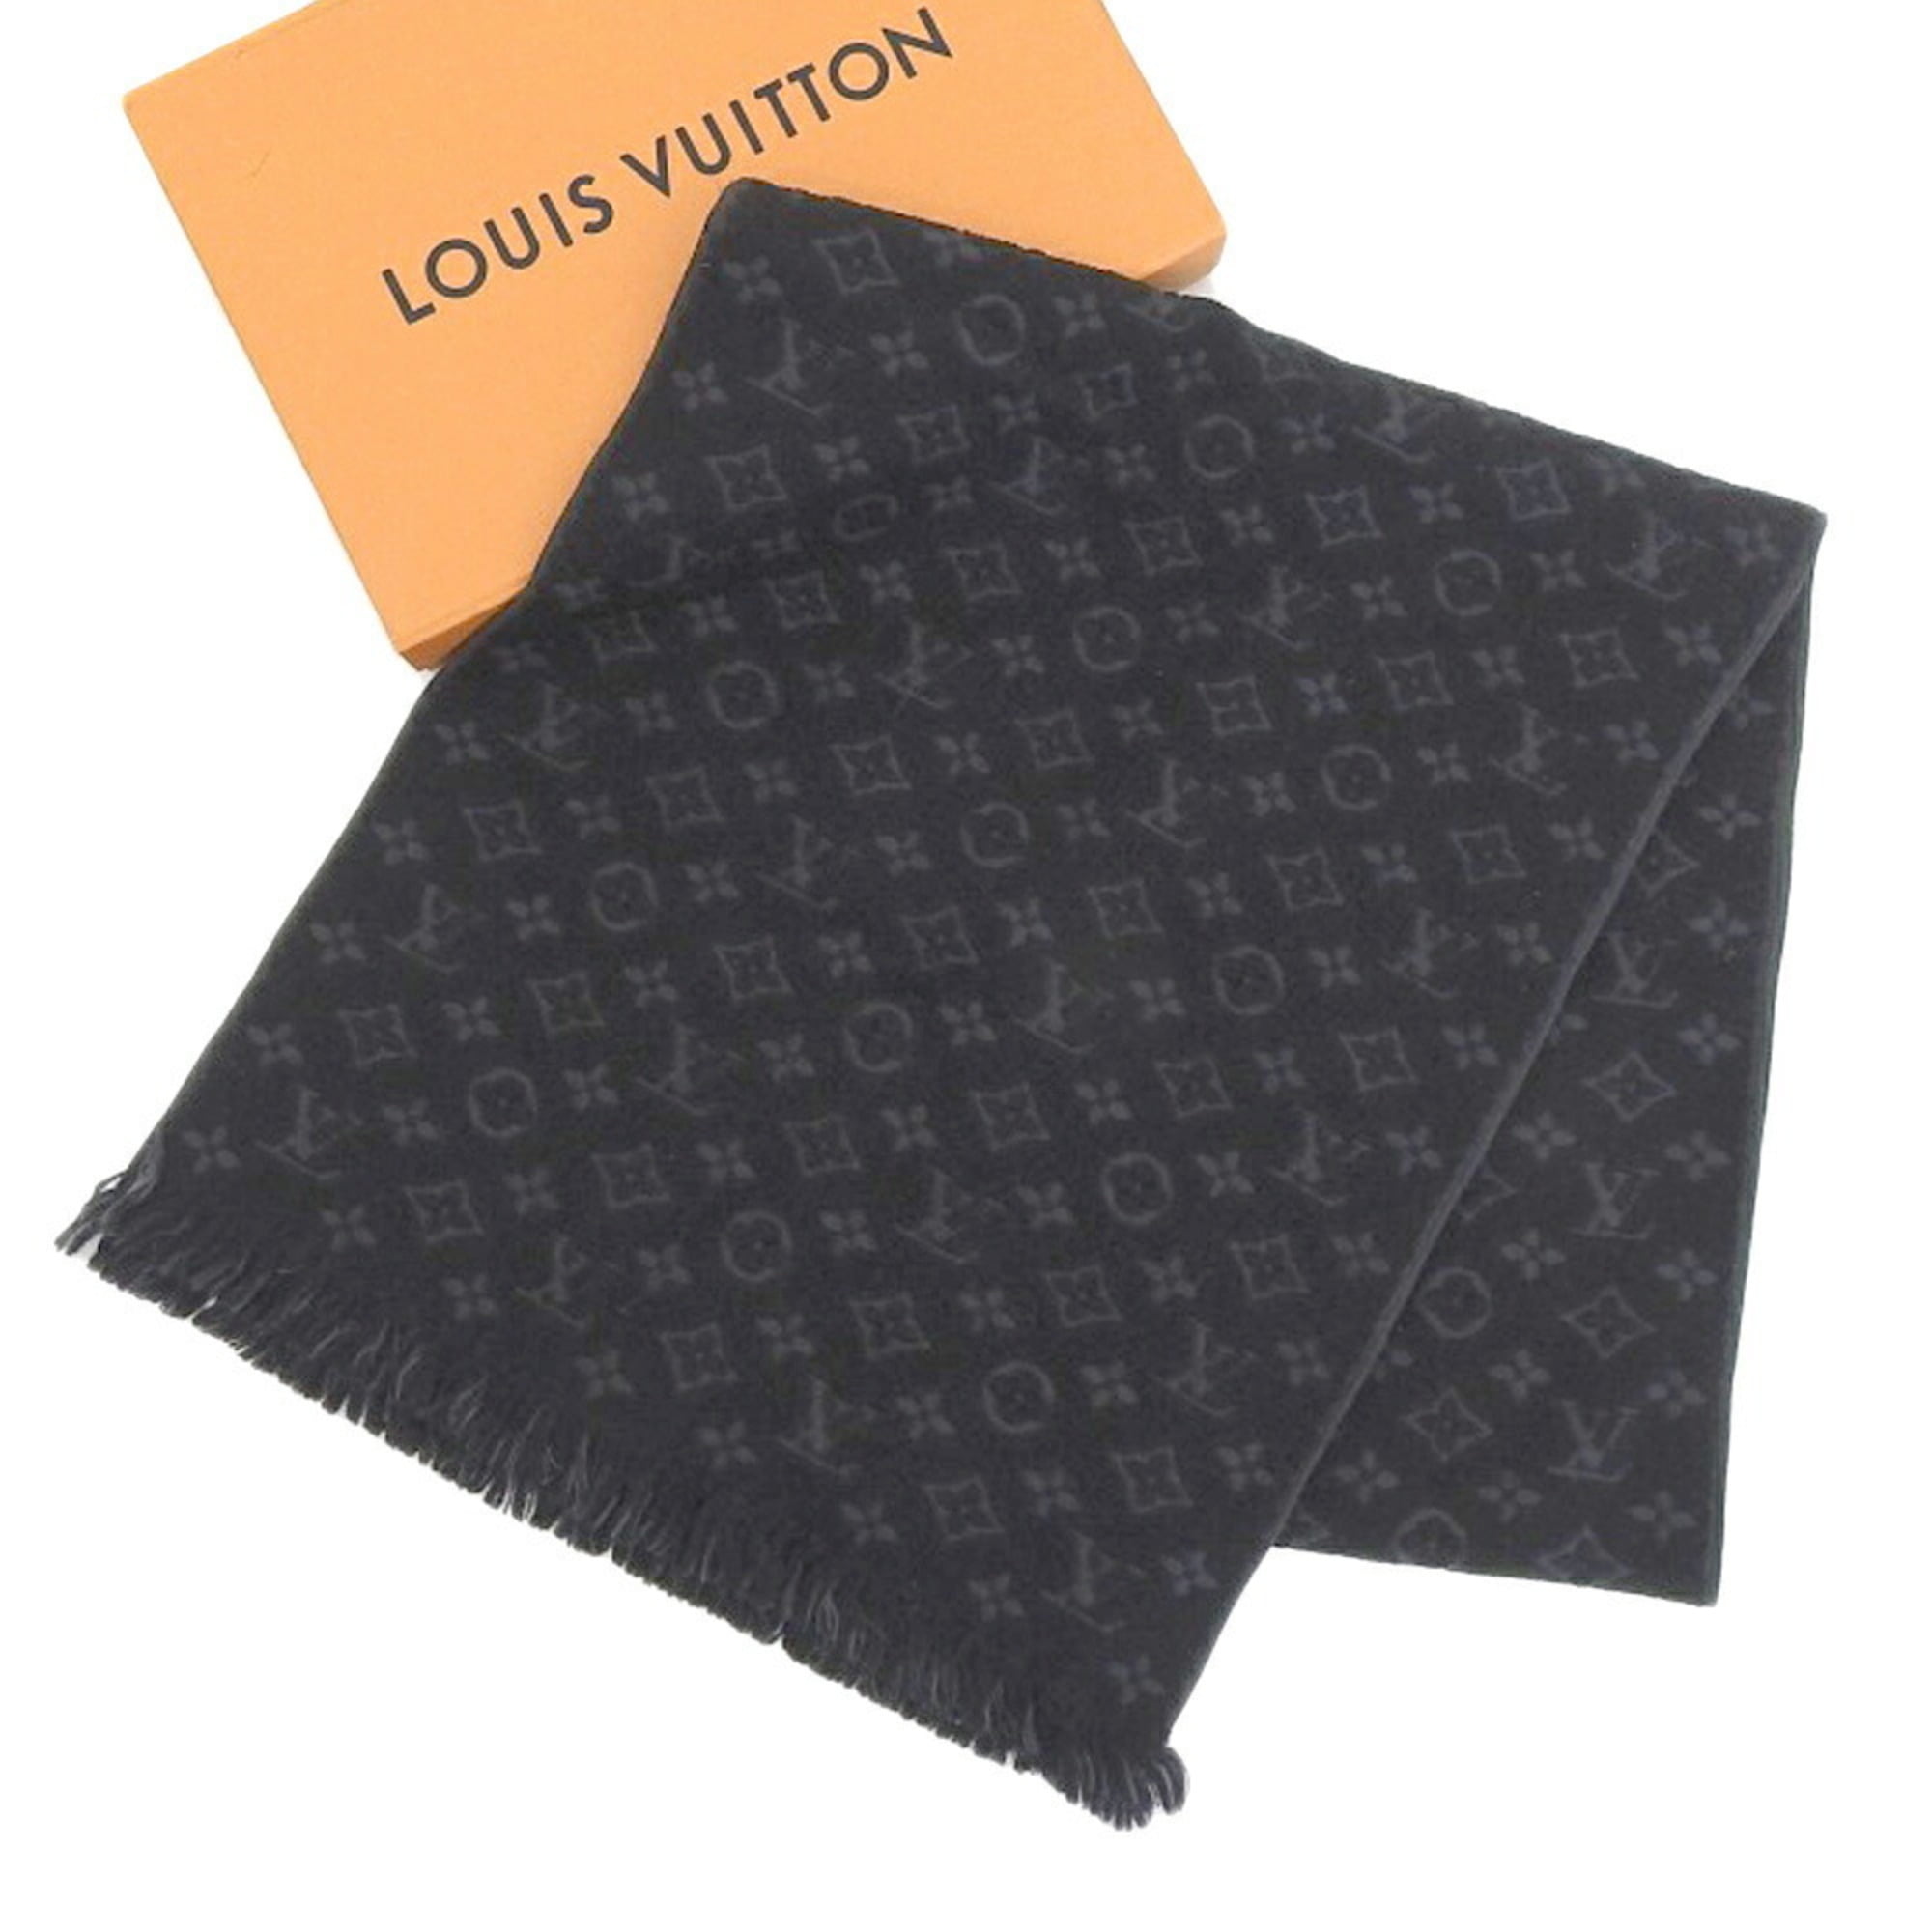 Louis Vuitton Monogram Classic Scarf Review